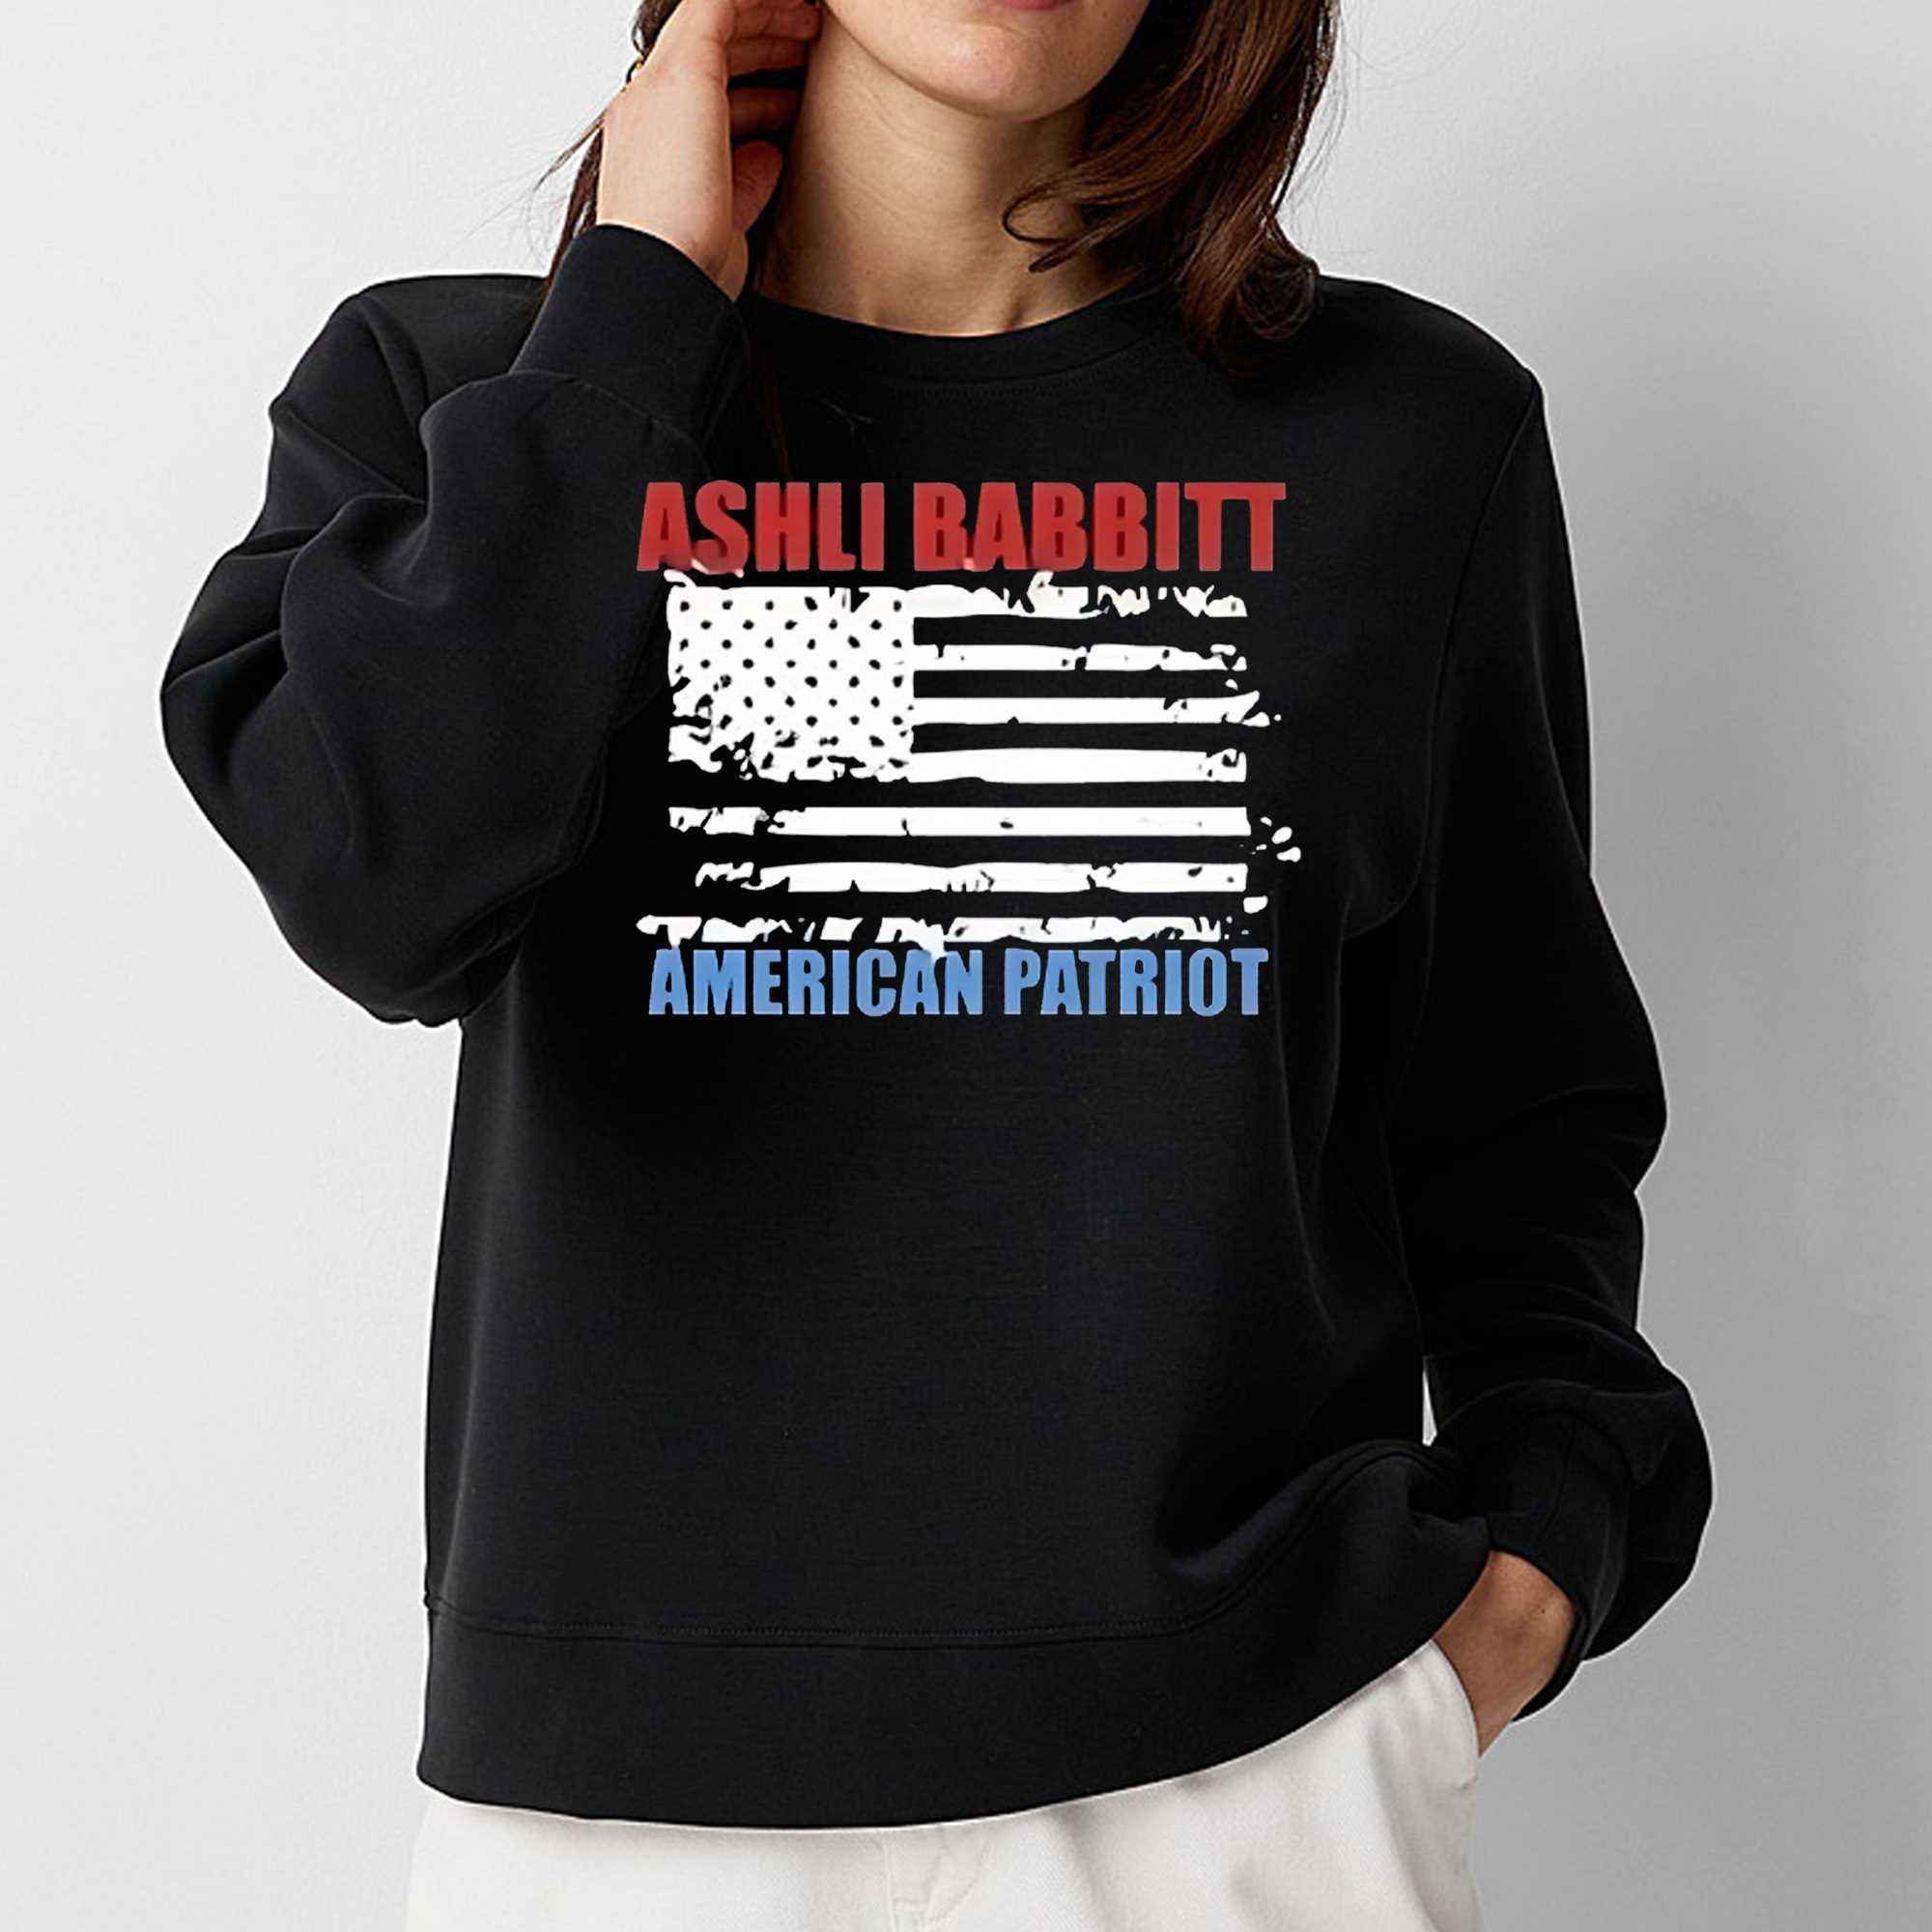 Ashli Babbitt American Patriot T-shirt 